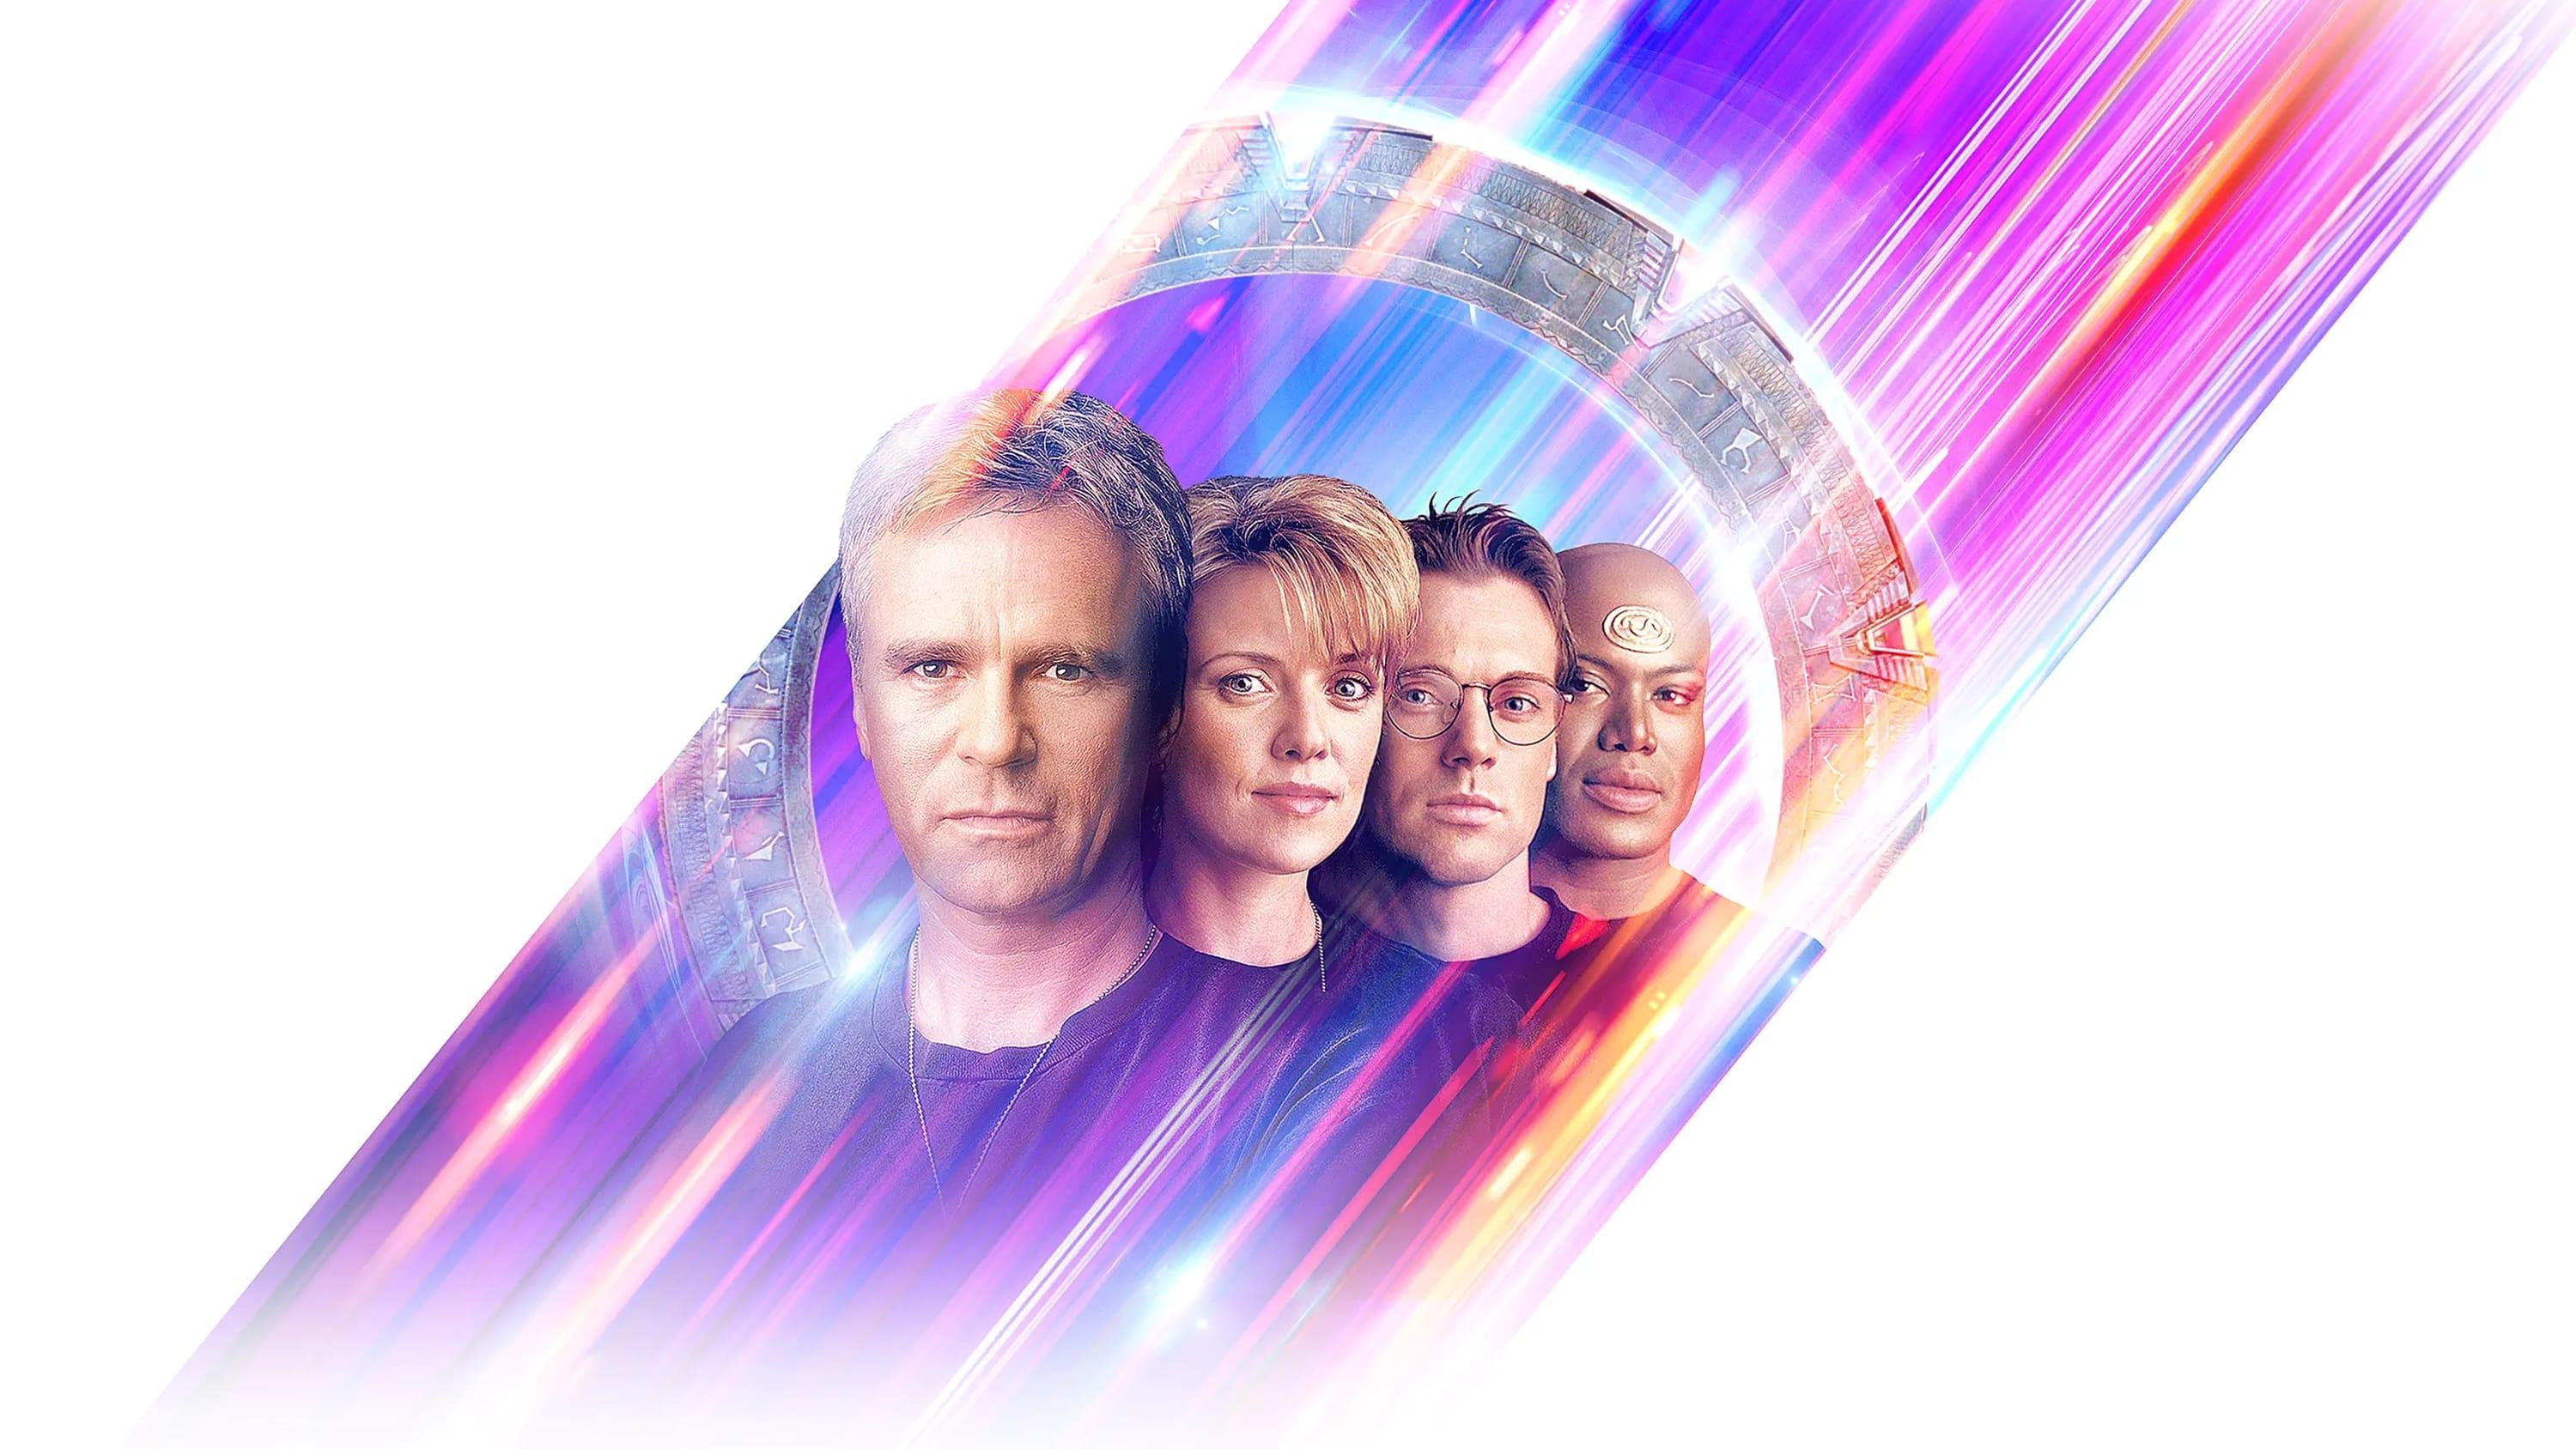 Stargate SG-1 backdrop